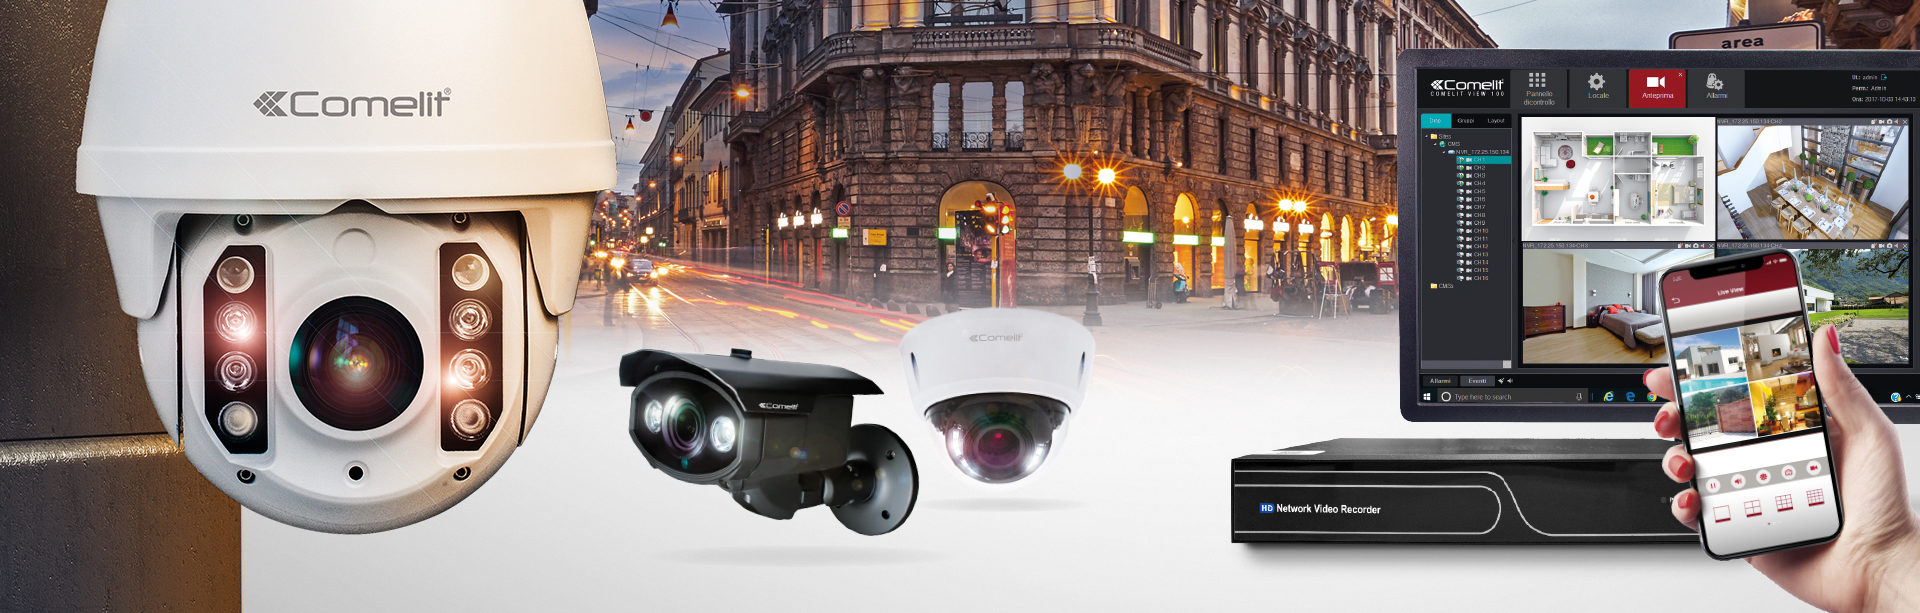 video-surveillance dom store